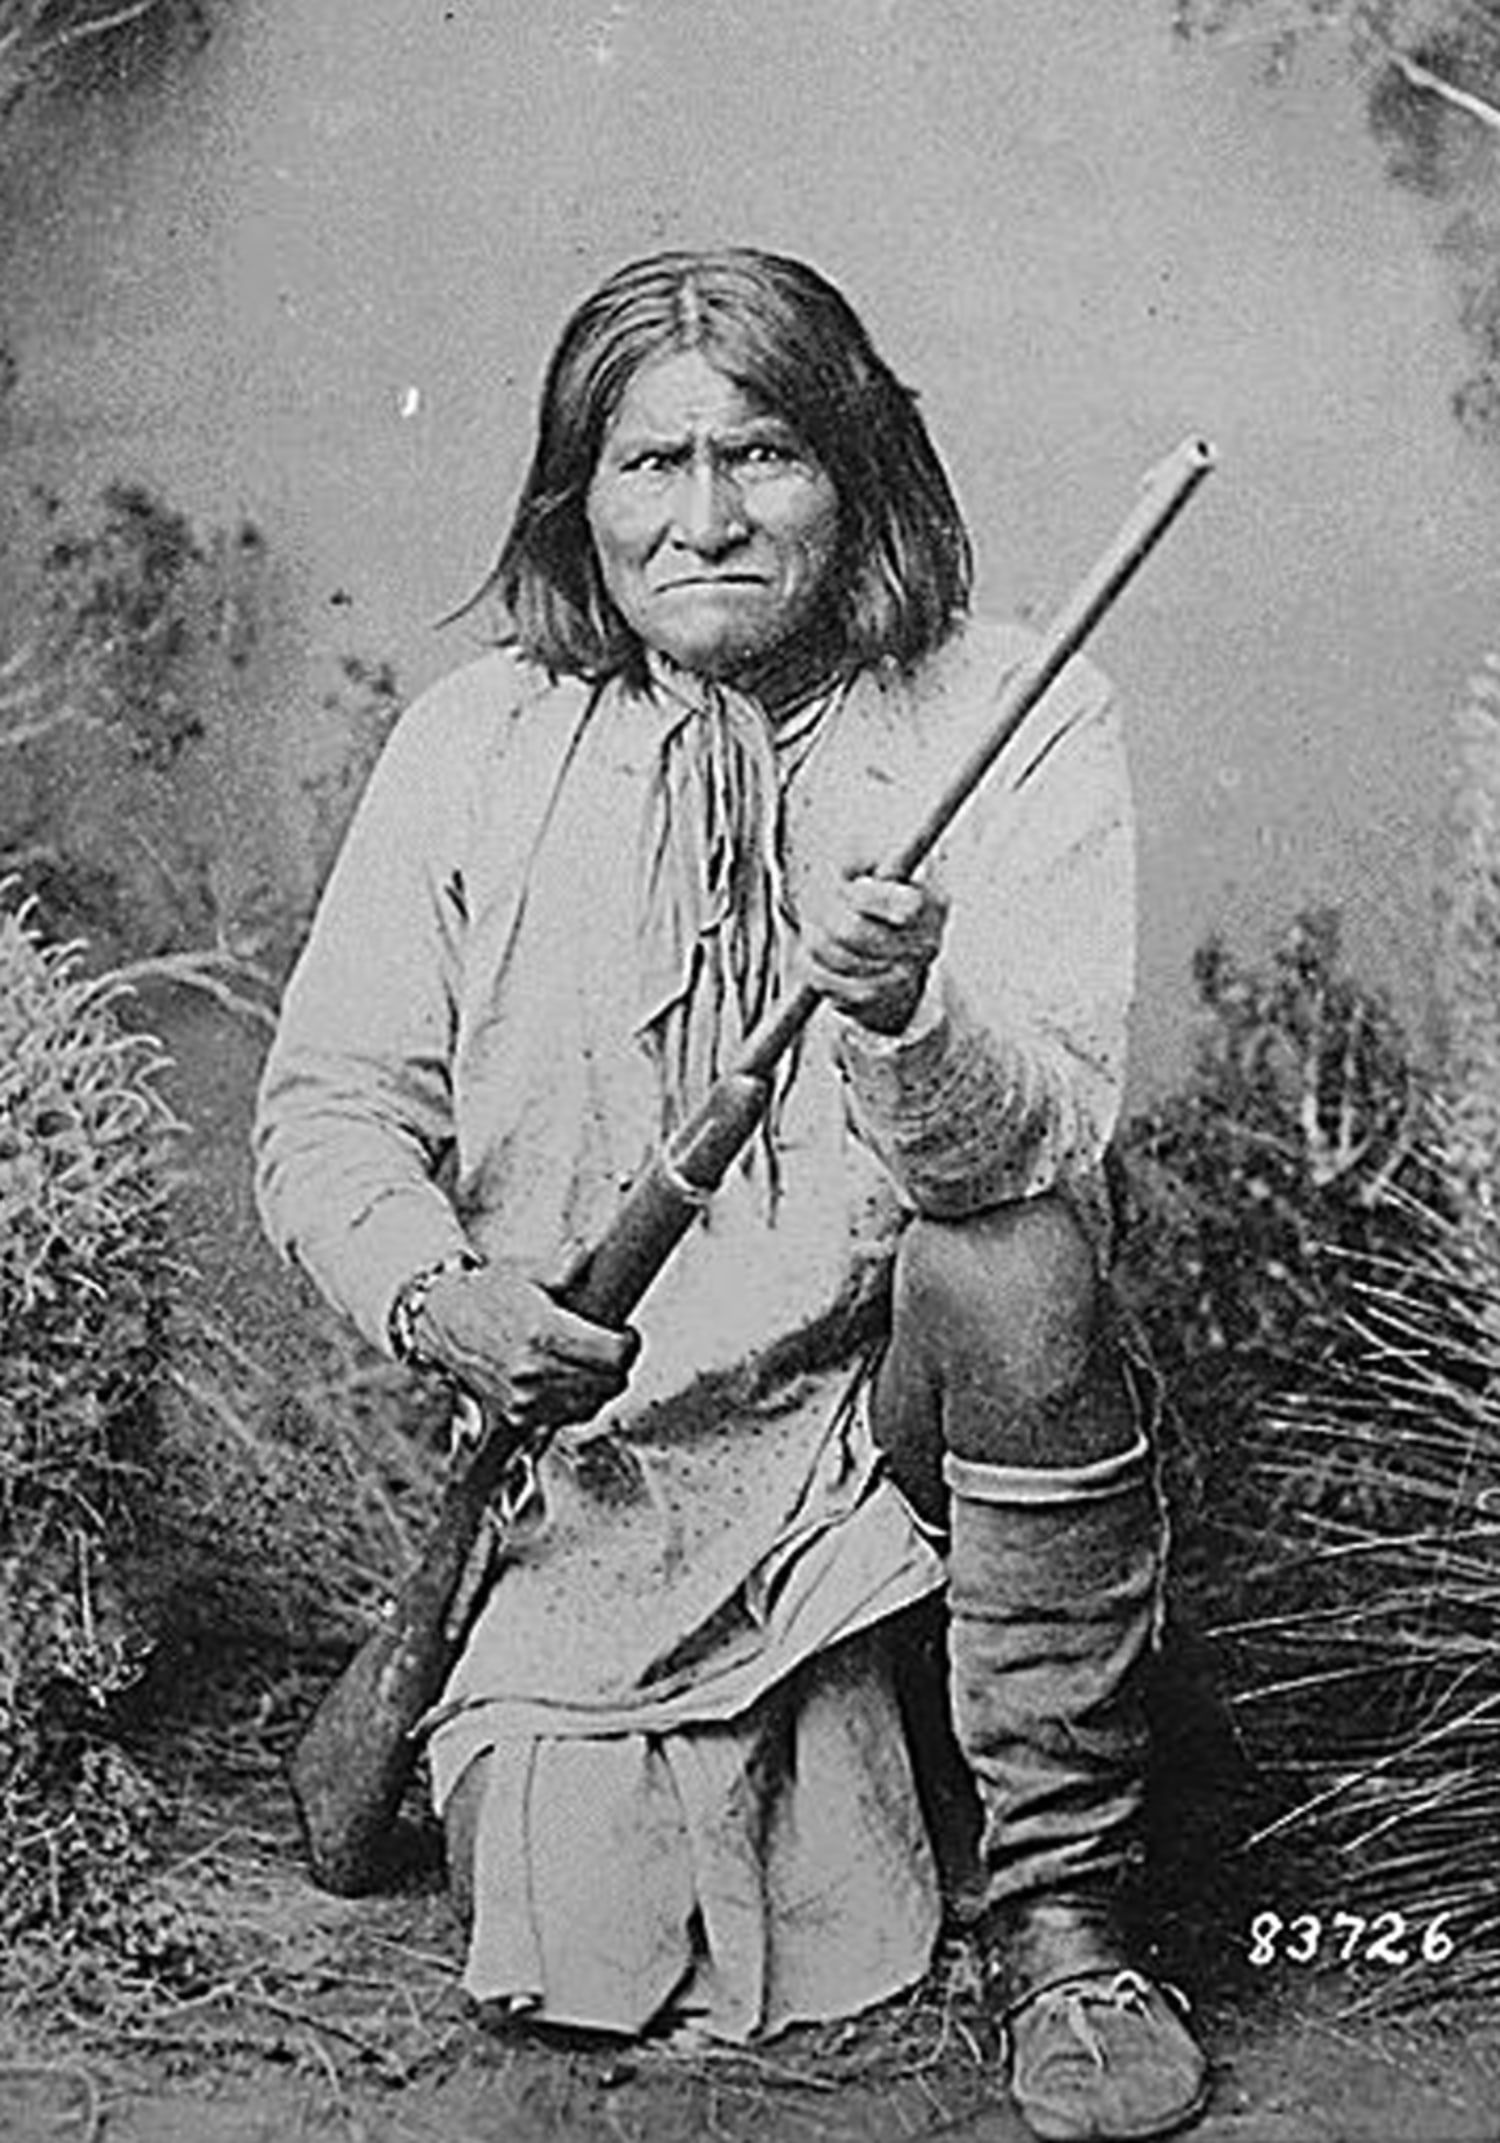 Geronimo's descendants accuse Yale society of skulduggery